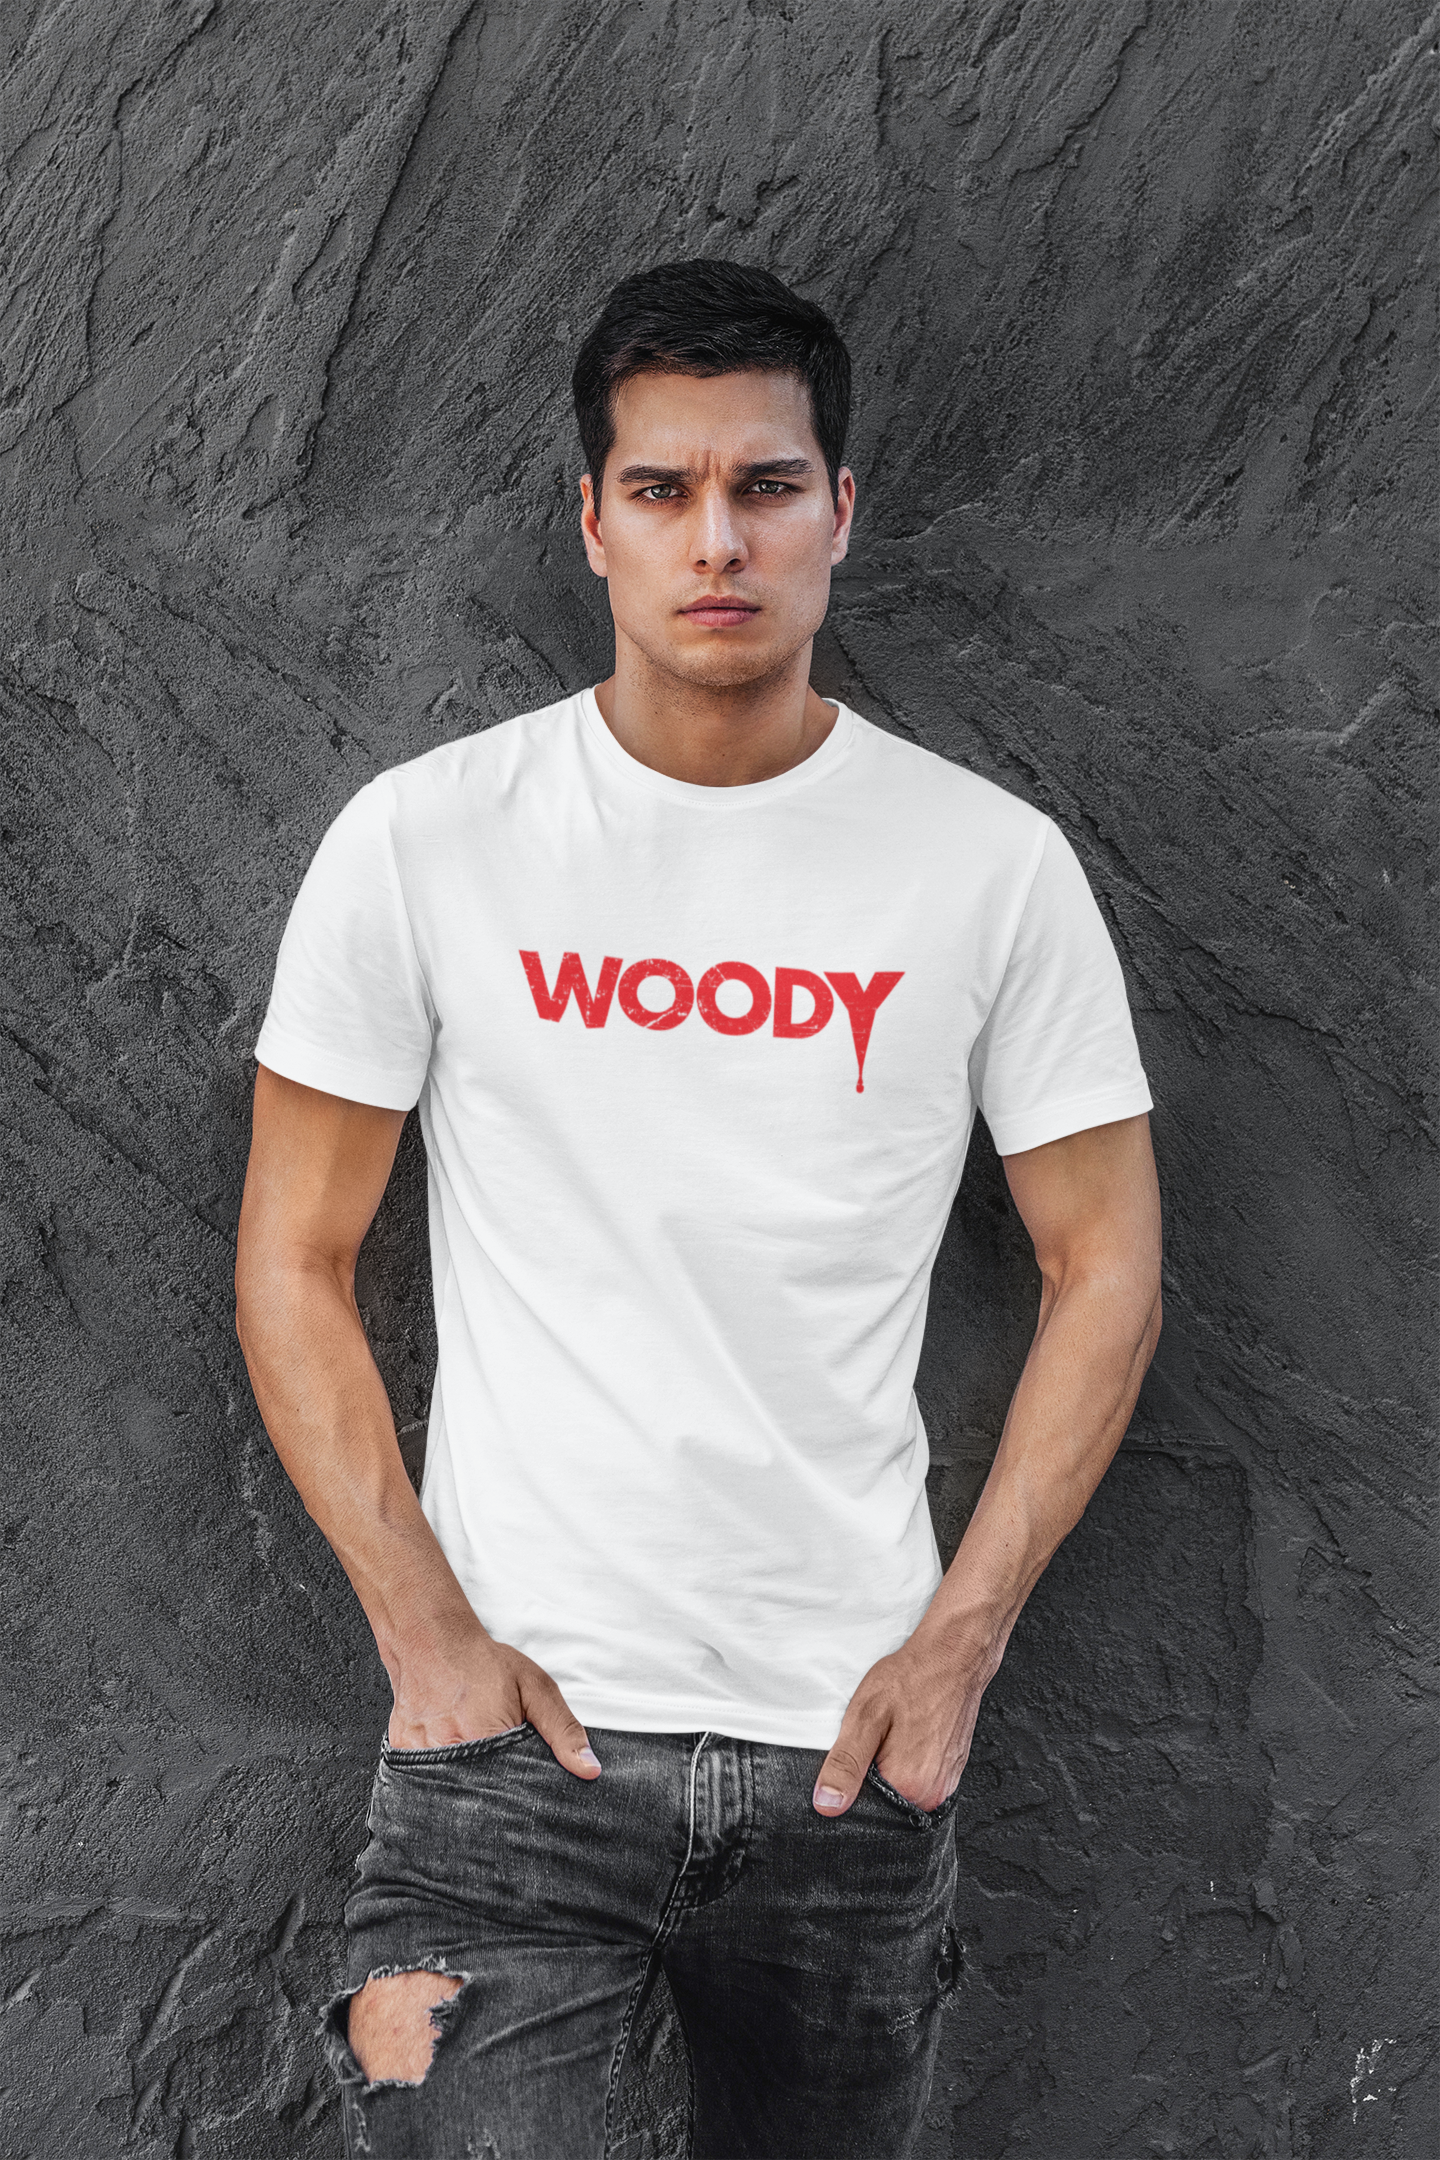 WOODY: Chucky inspired Men's T-Shirt